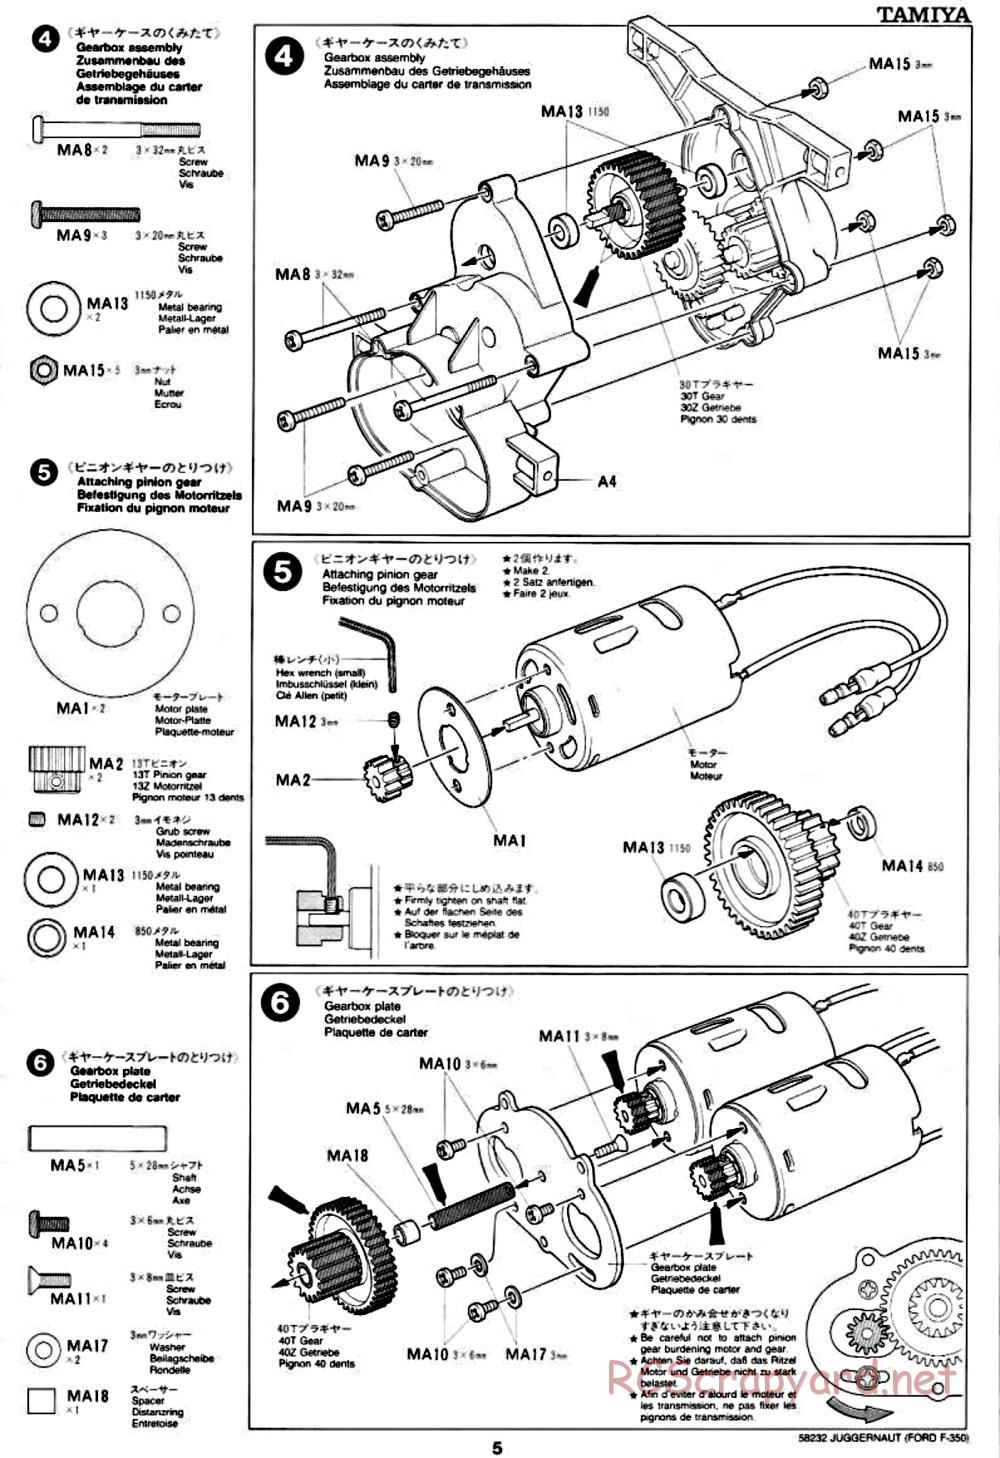 Tamiya - Juggernaut Chassis - Manual - Page 5